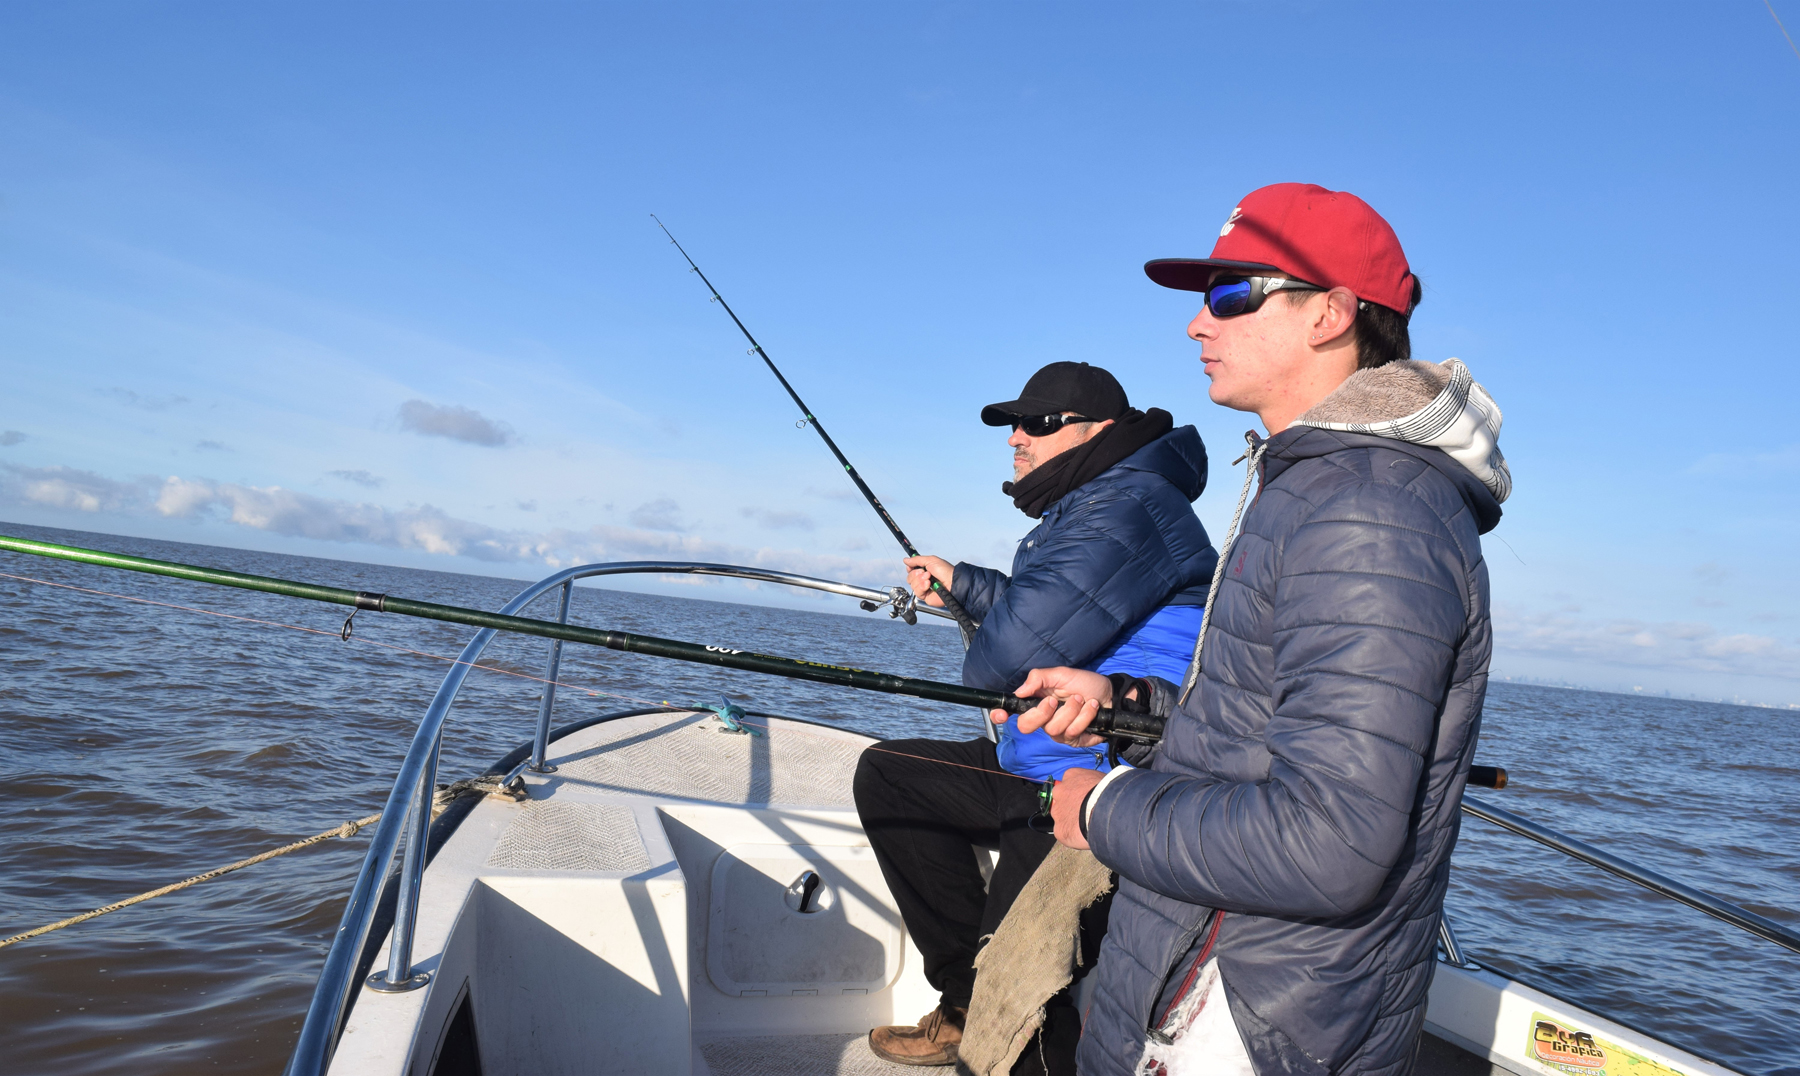 Pescar en Mar del Plata